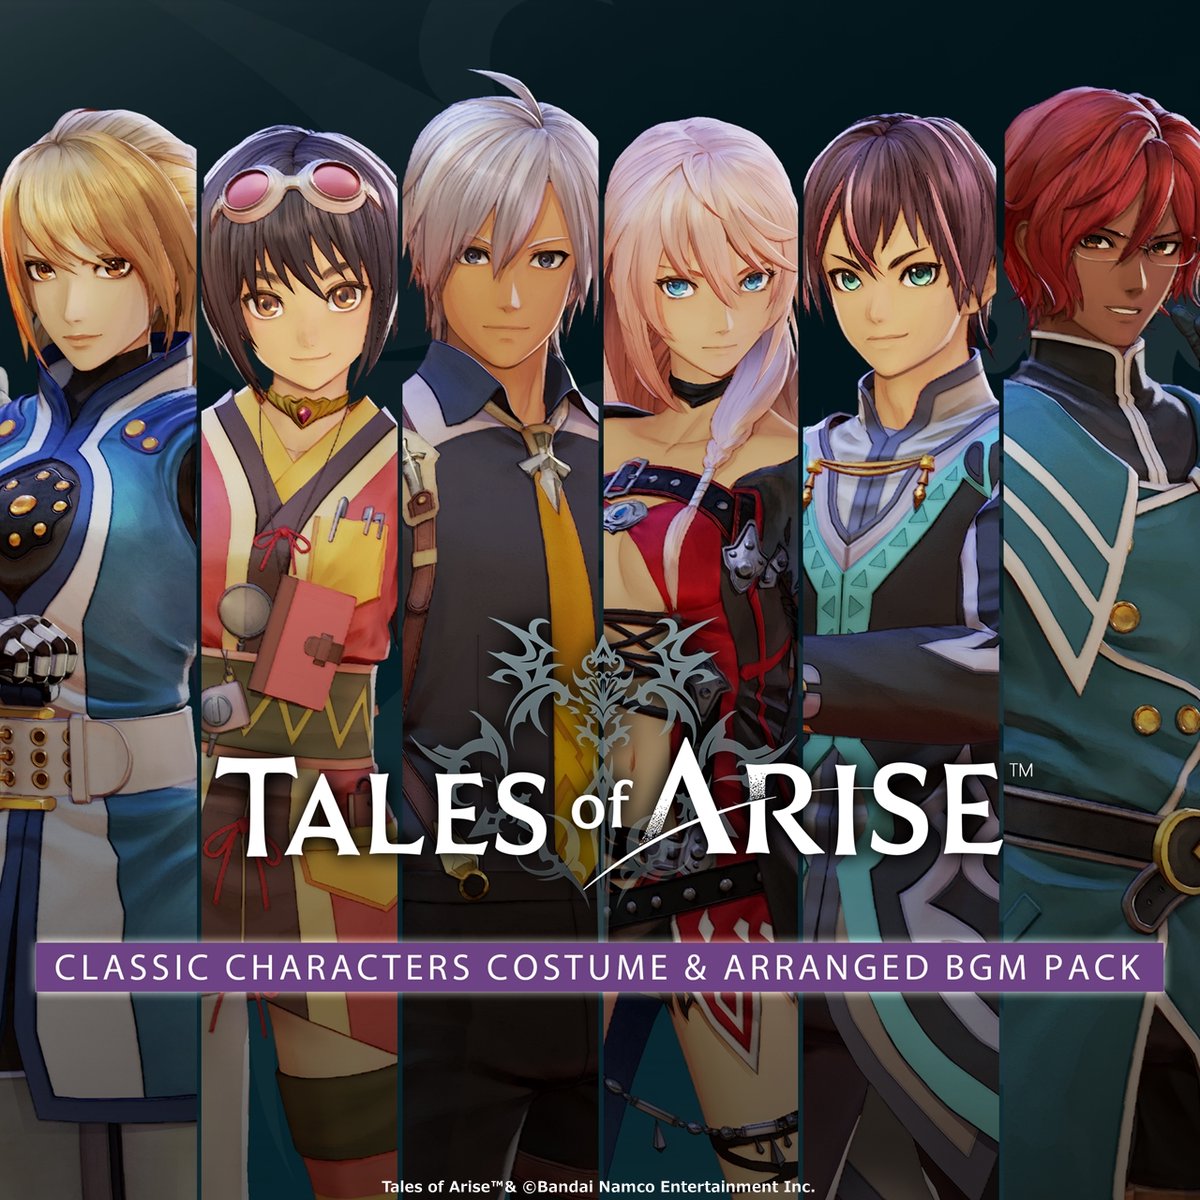 Tales of ARISE PS4版 早期購入封入特典